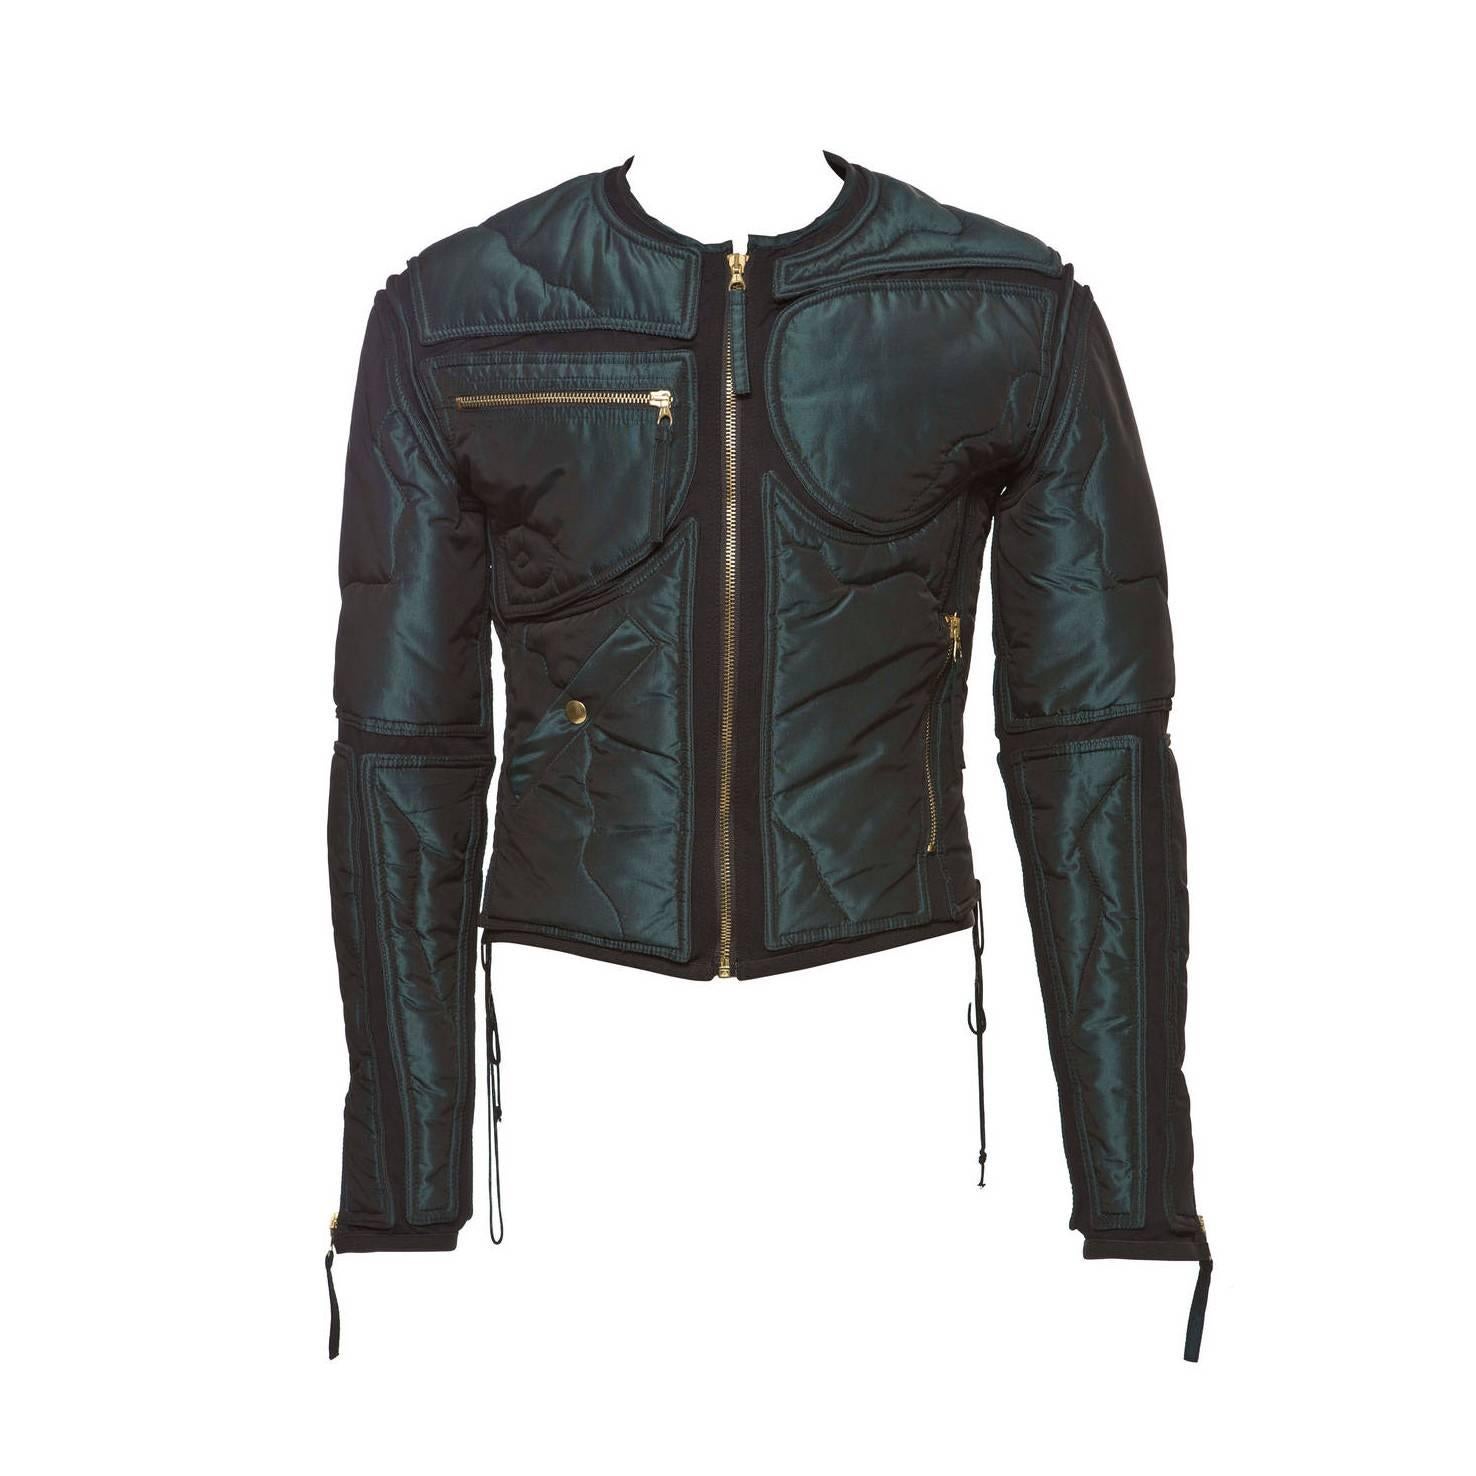 Jean Paul Gaultier Cyber Collection Men's Jacket, Fall 1995